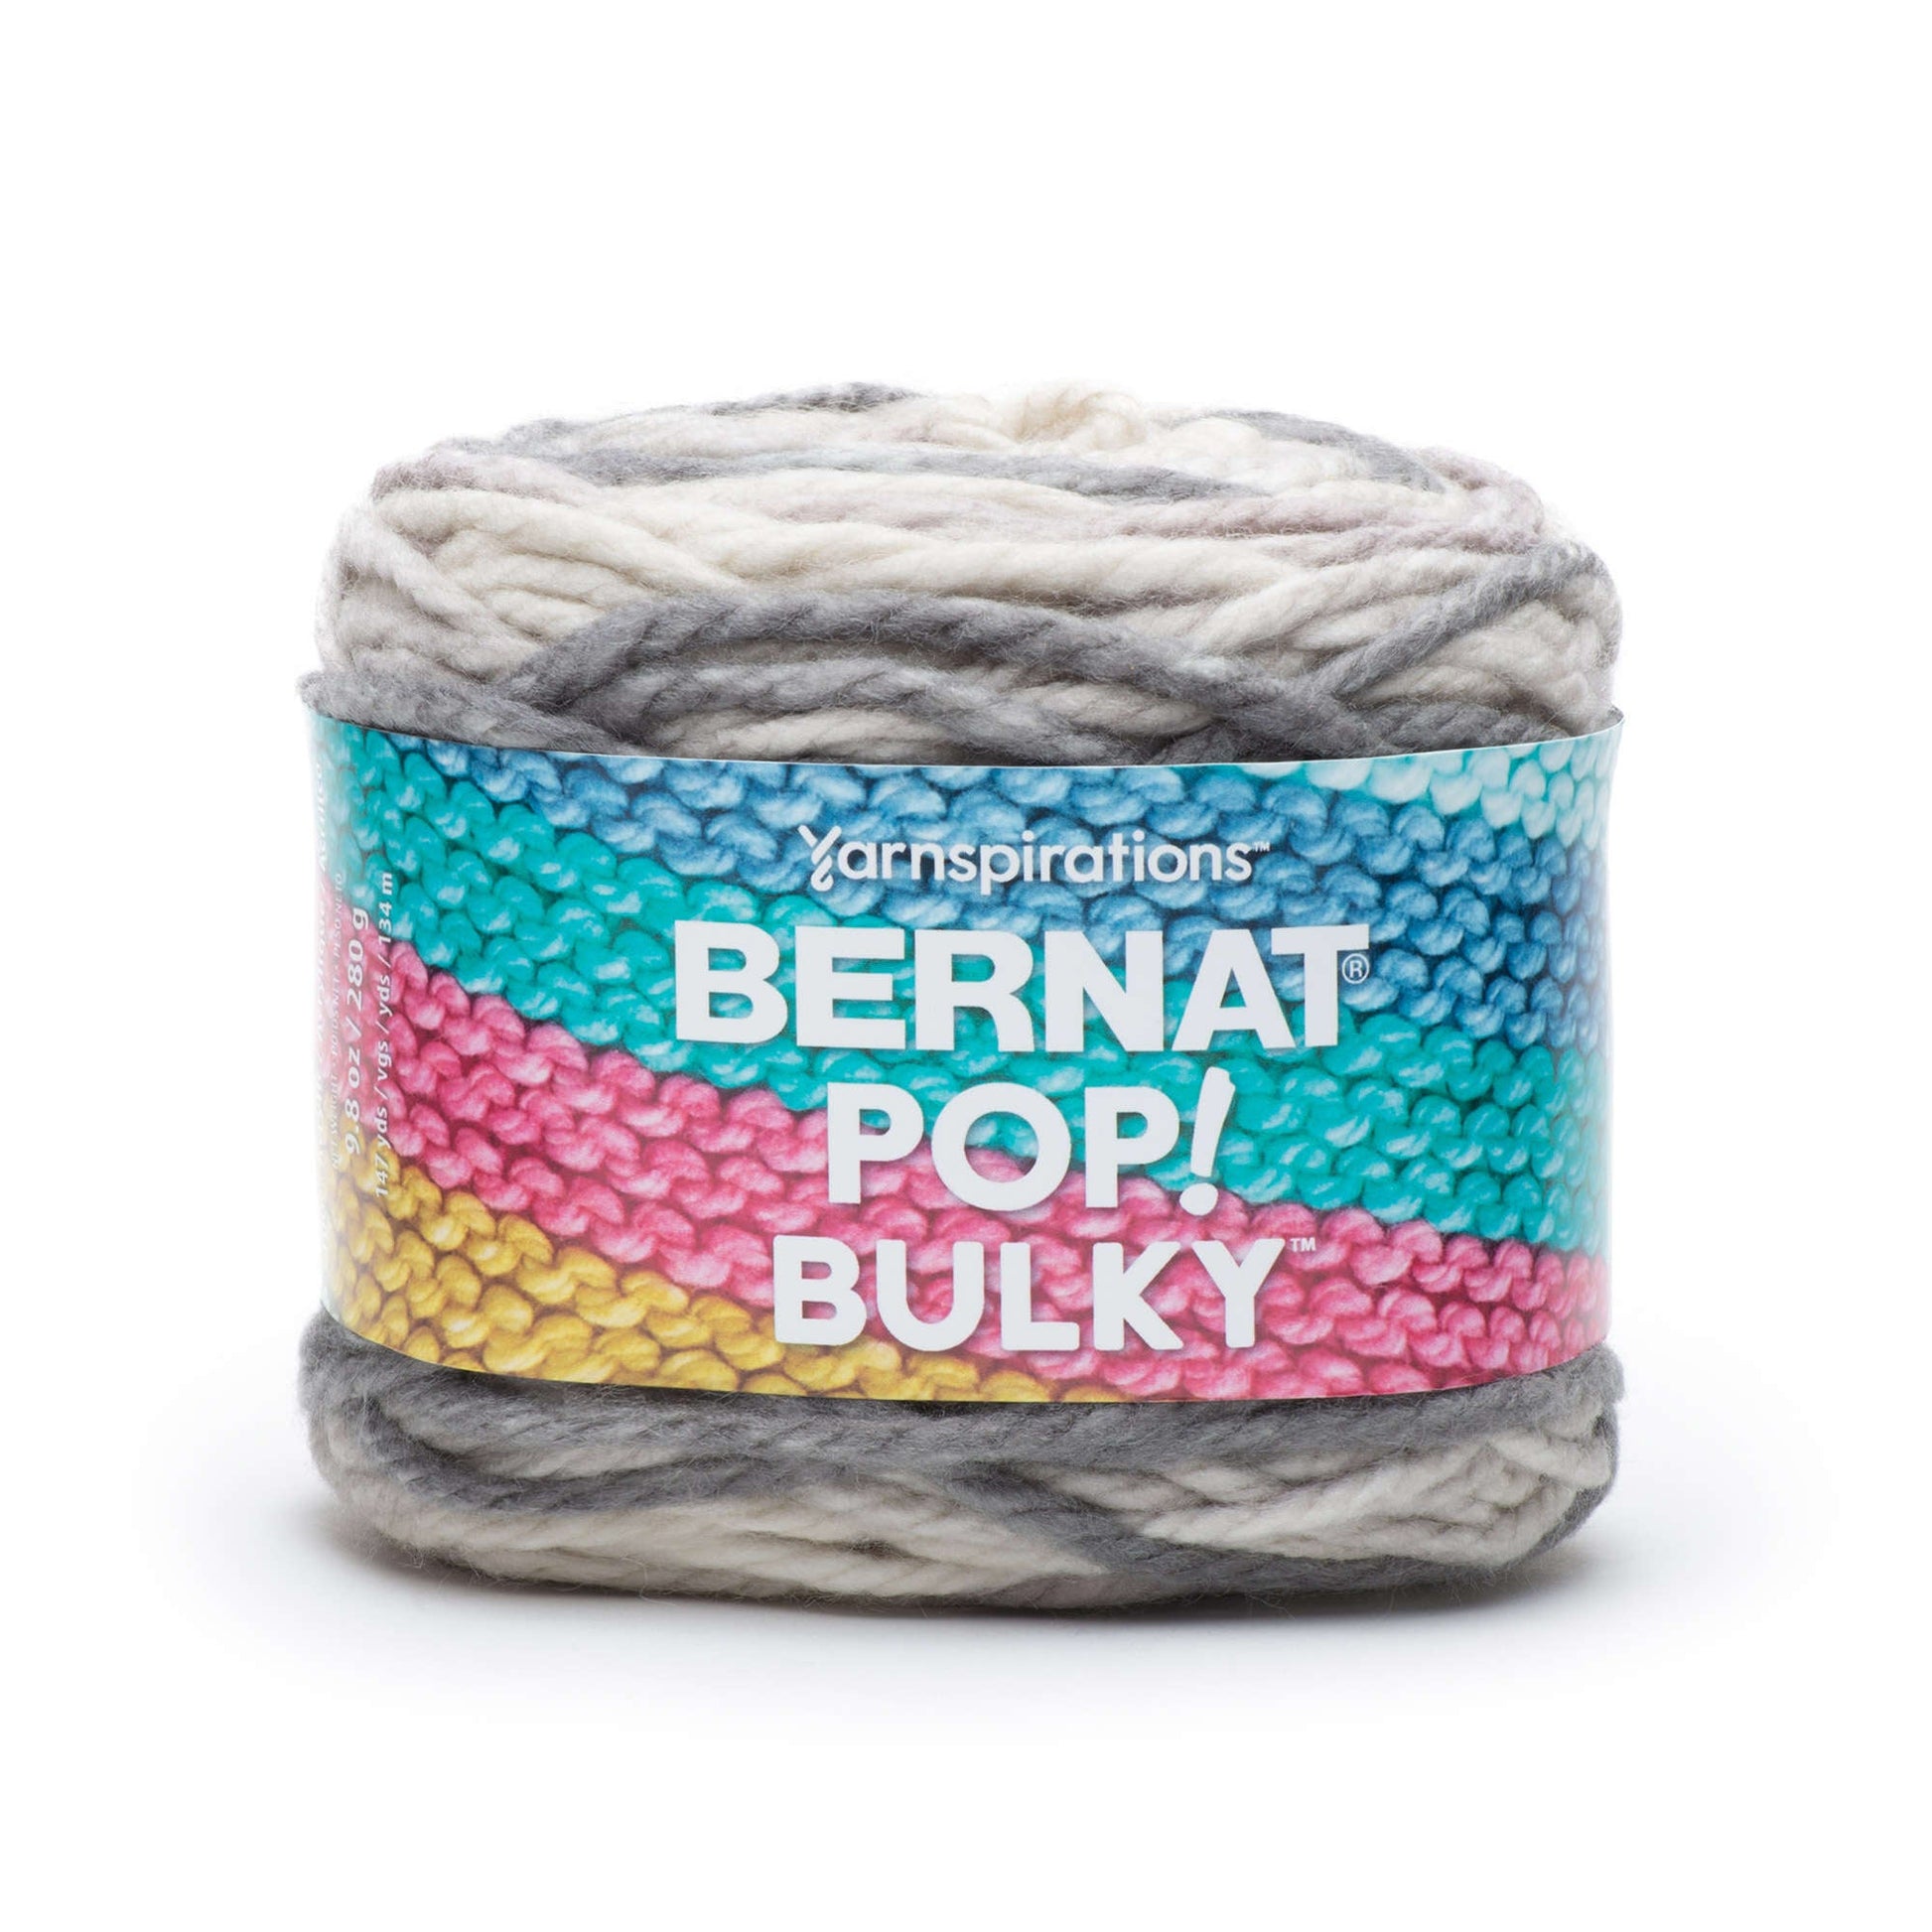 Bernat Pop! Bulky Yarn - Discontinued Shades